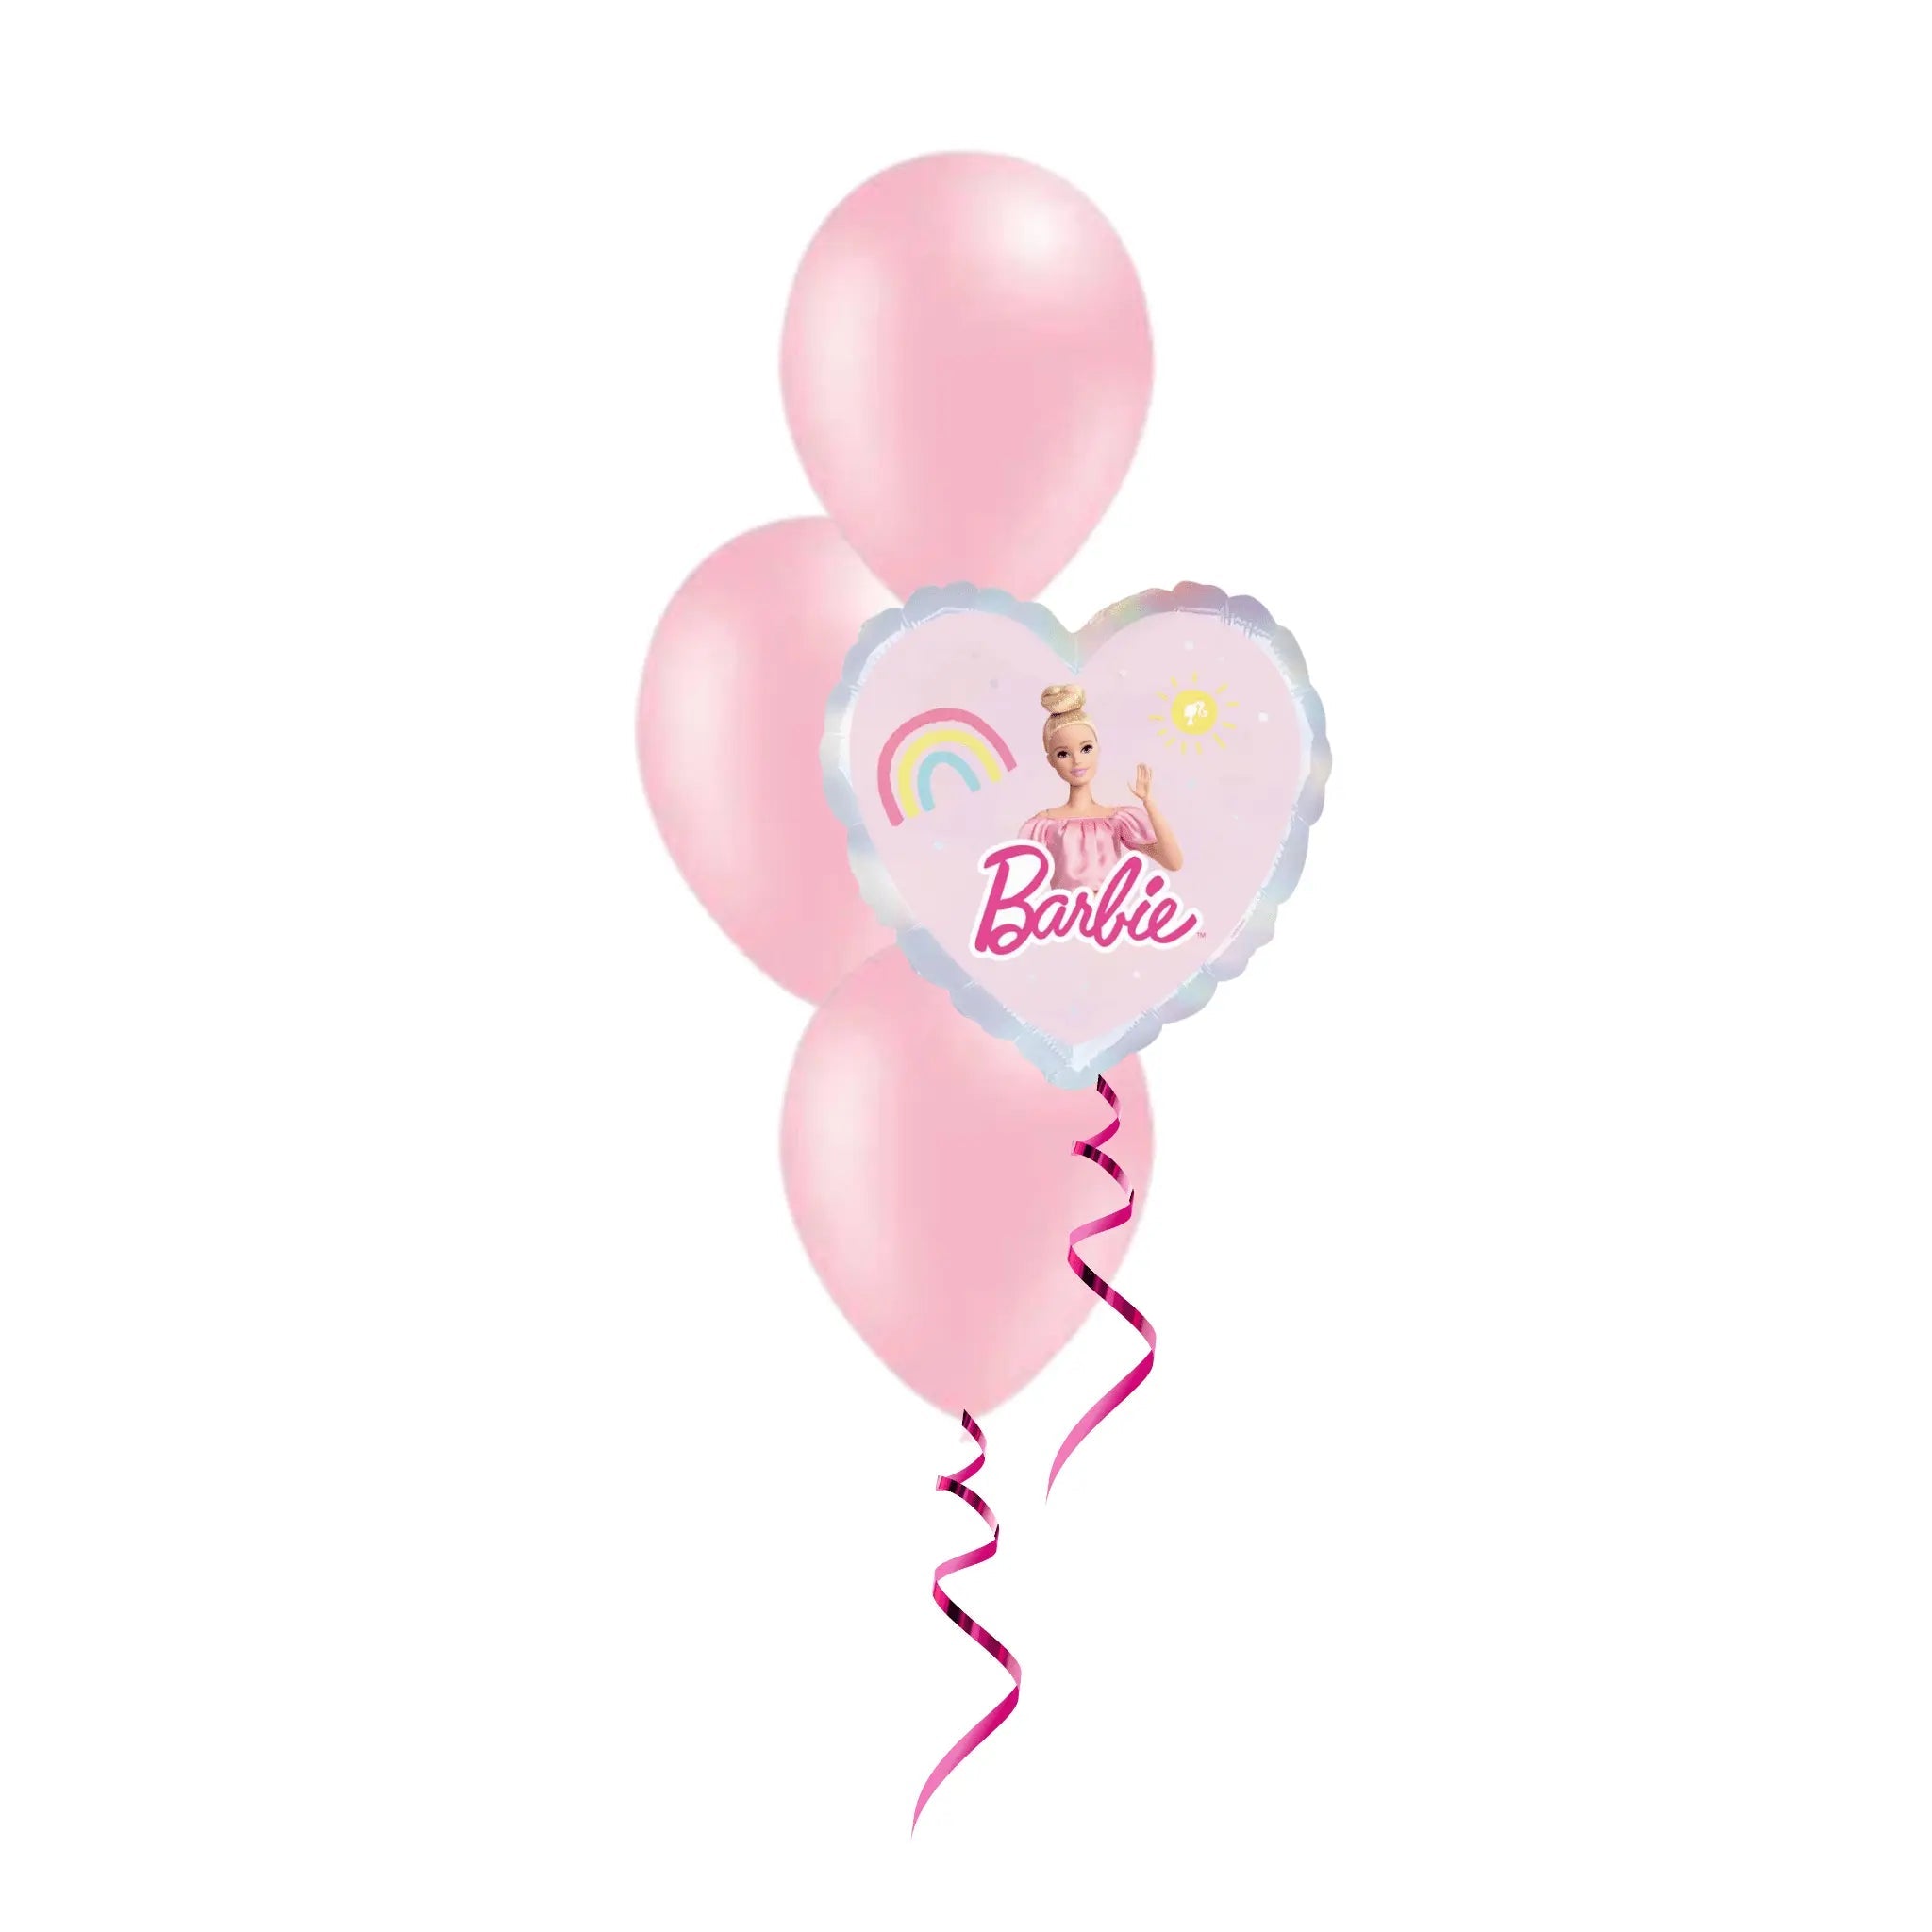 Barbie Balloon Bouquet | The Party Hut